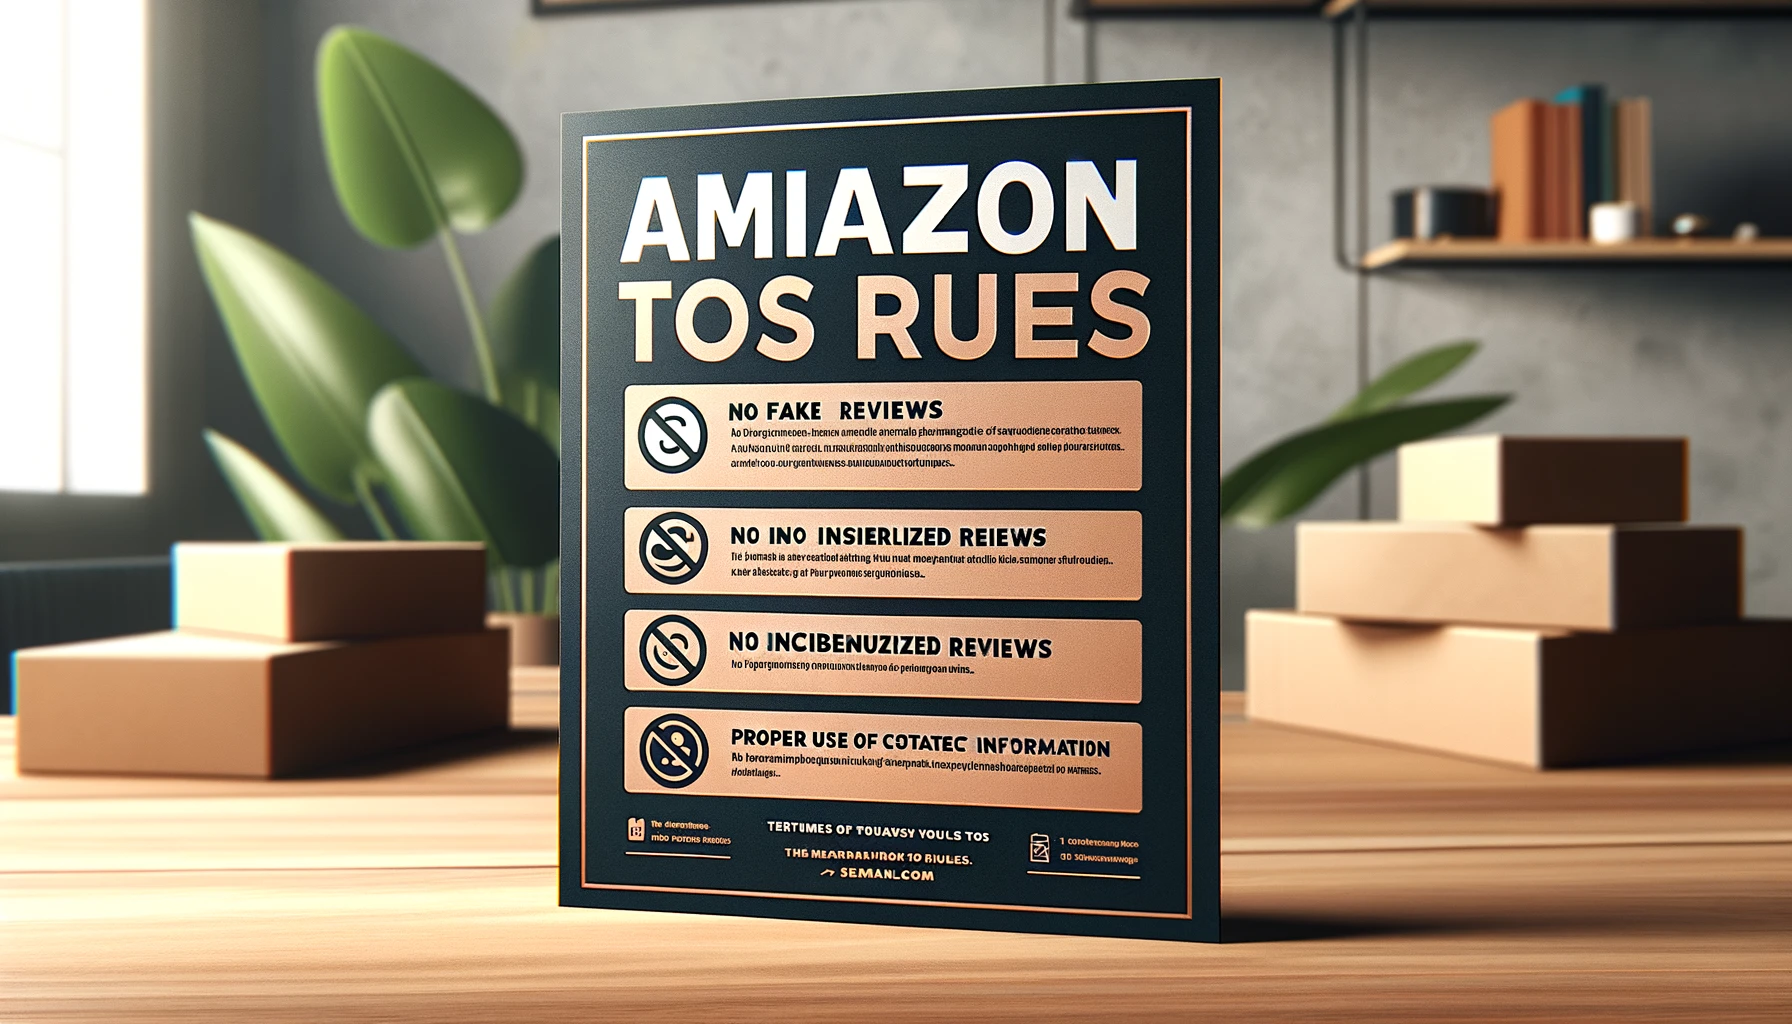 Amazon Produktbeilagen - Term of Service Konform